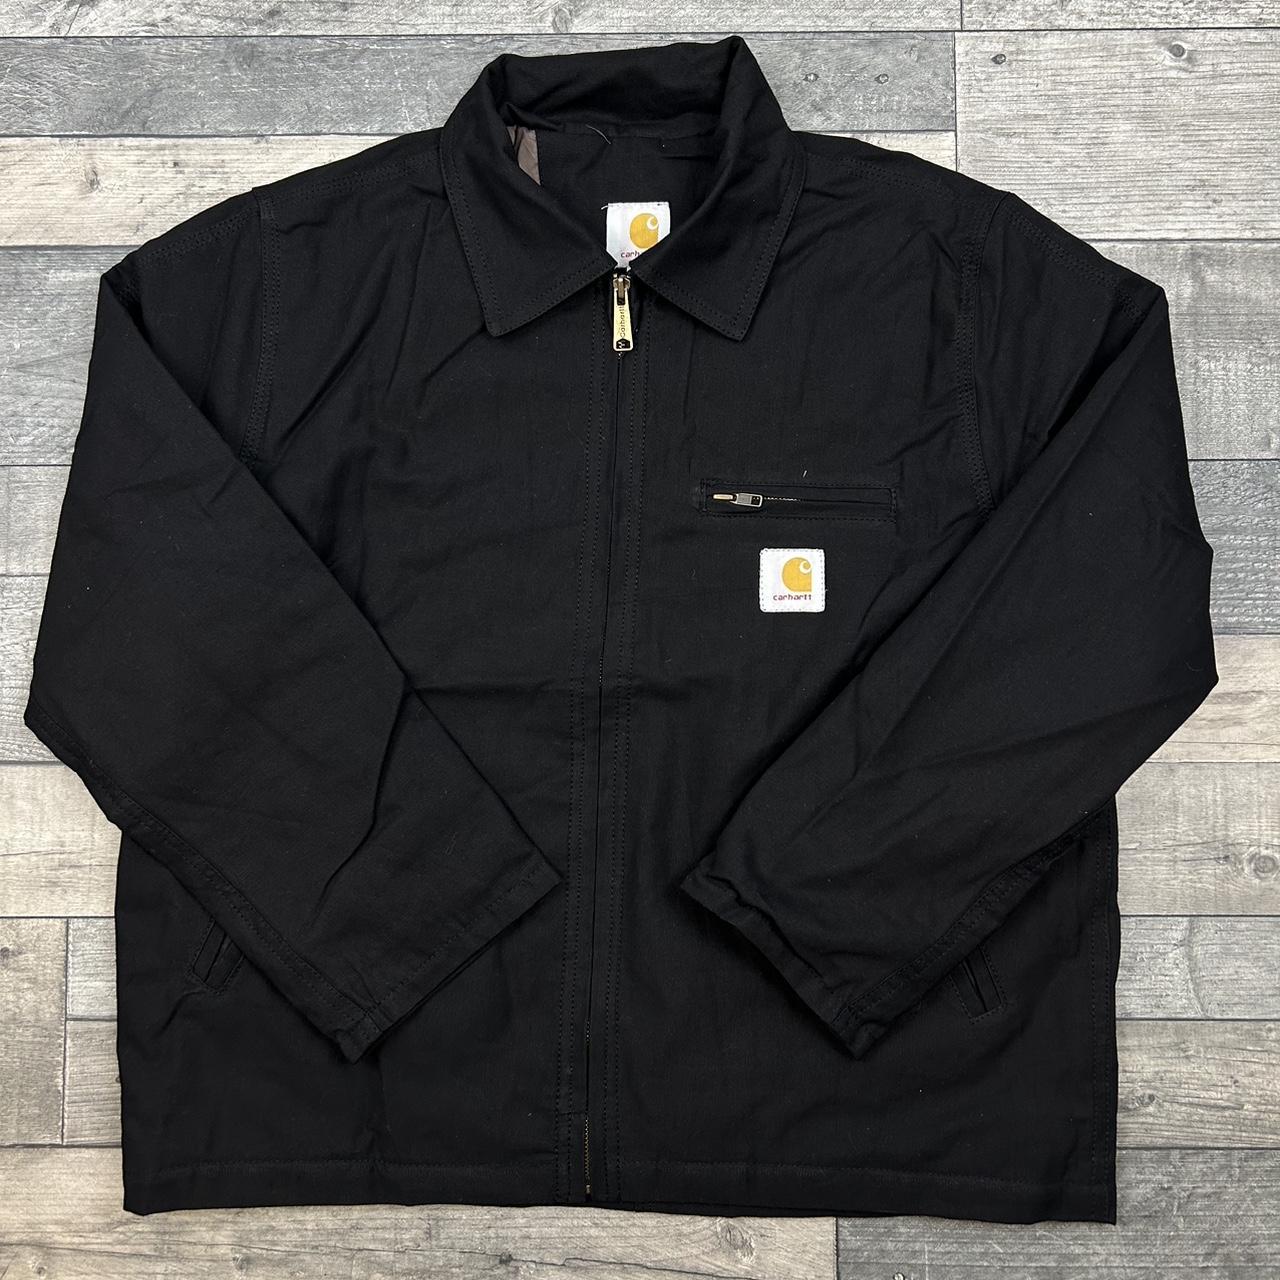 🍐 Carhartt WIP Detroit rework jacket in black with... - Depop